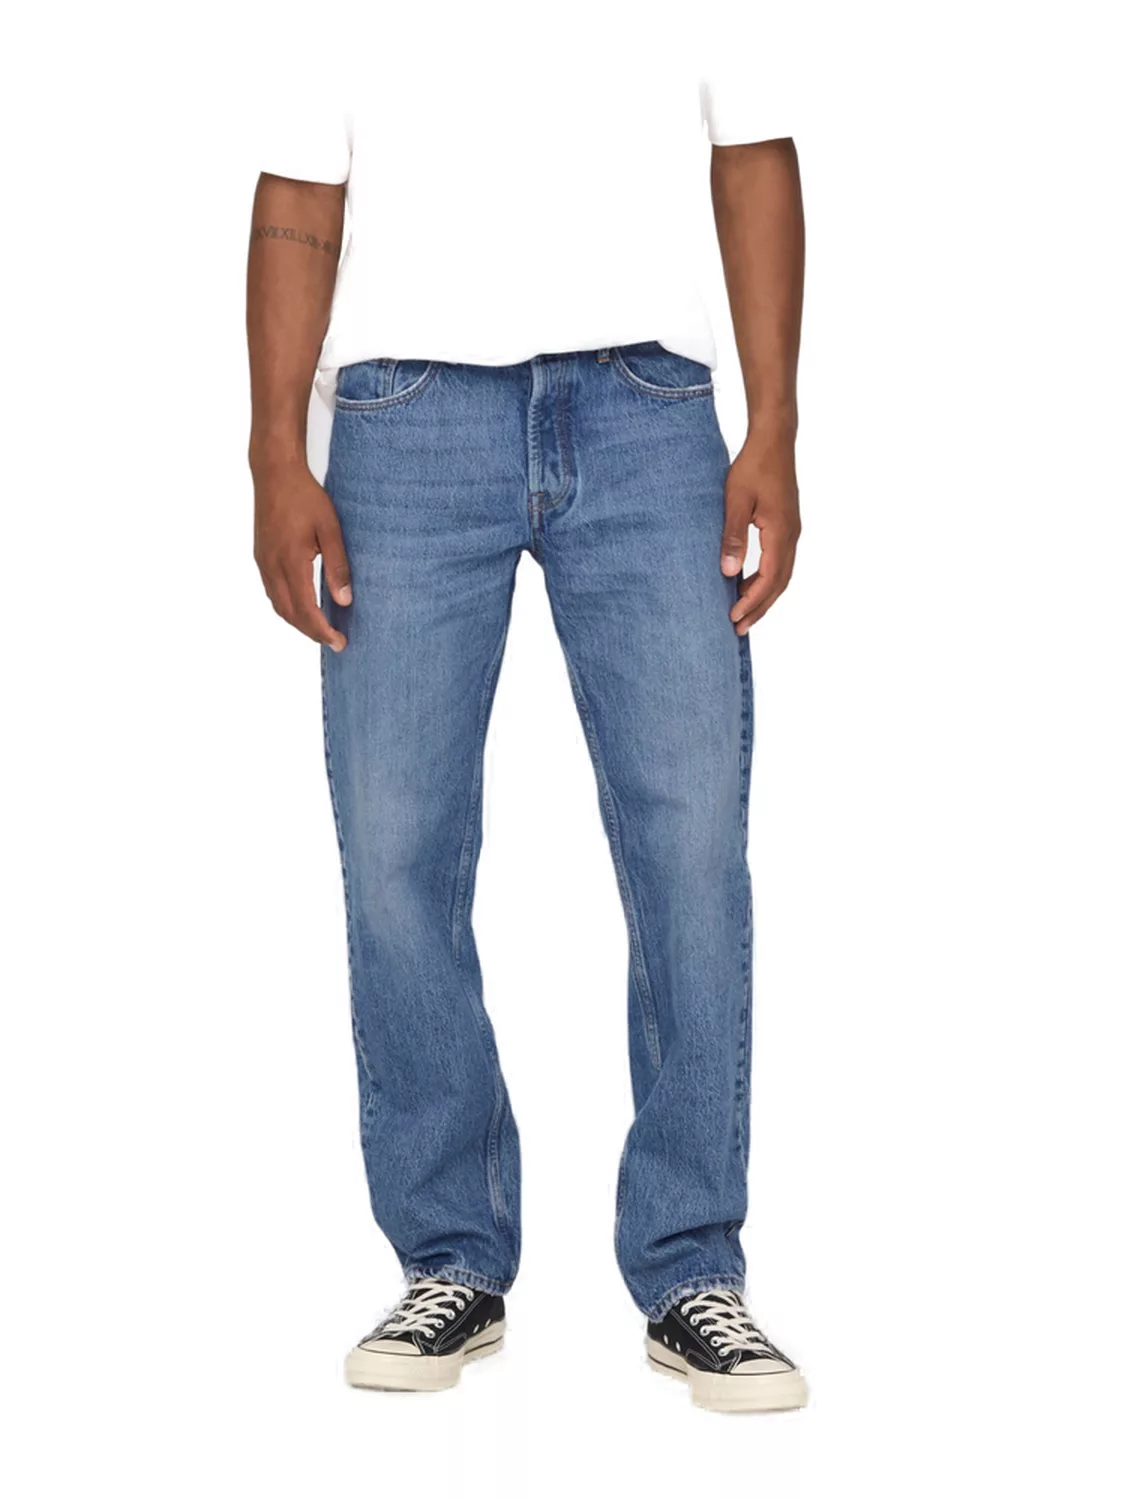 Only & Sons Herren Jeans ONSEDGE LOOSE 4939 - Relaxed Fit - Blau - Medium B günstig online kaufen